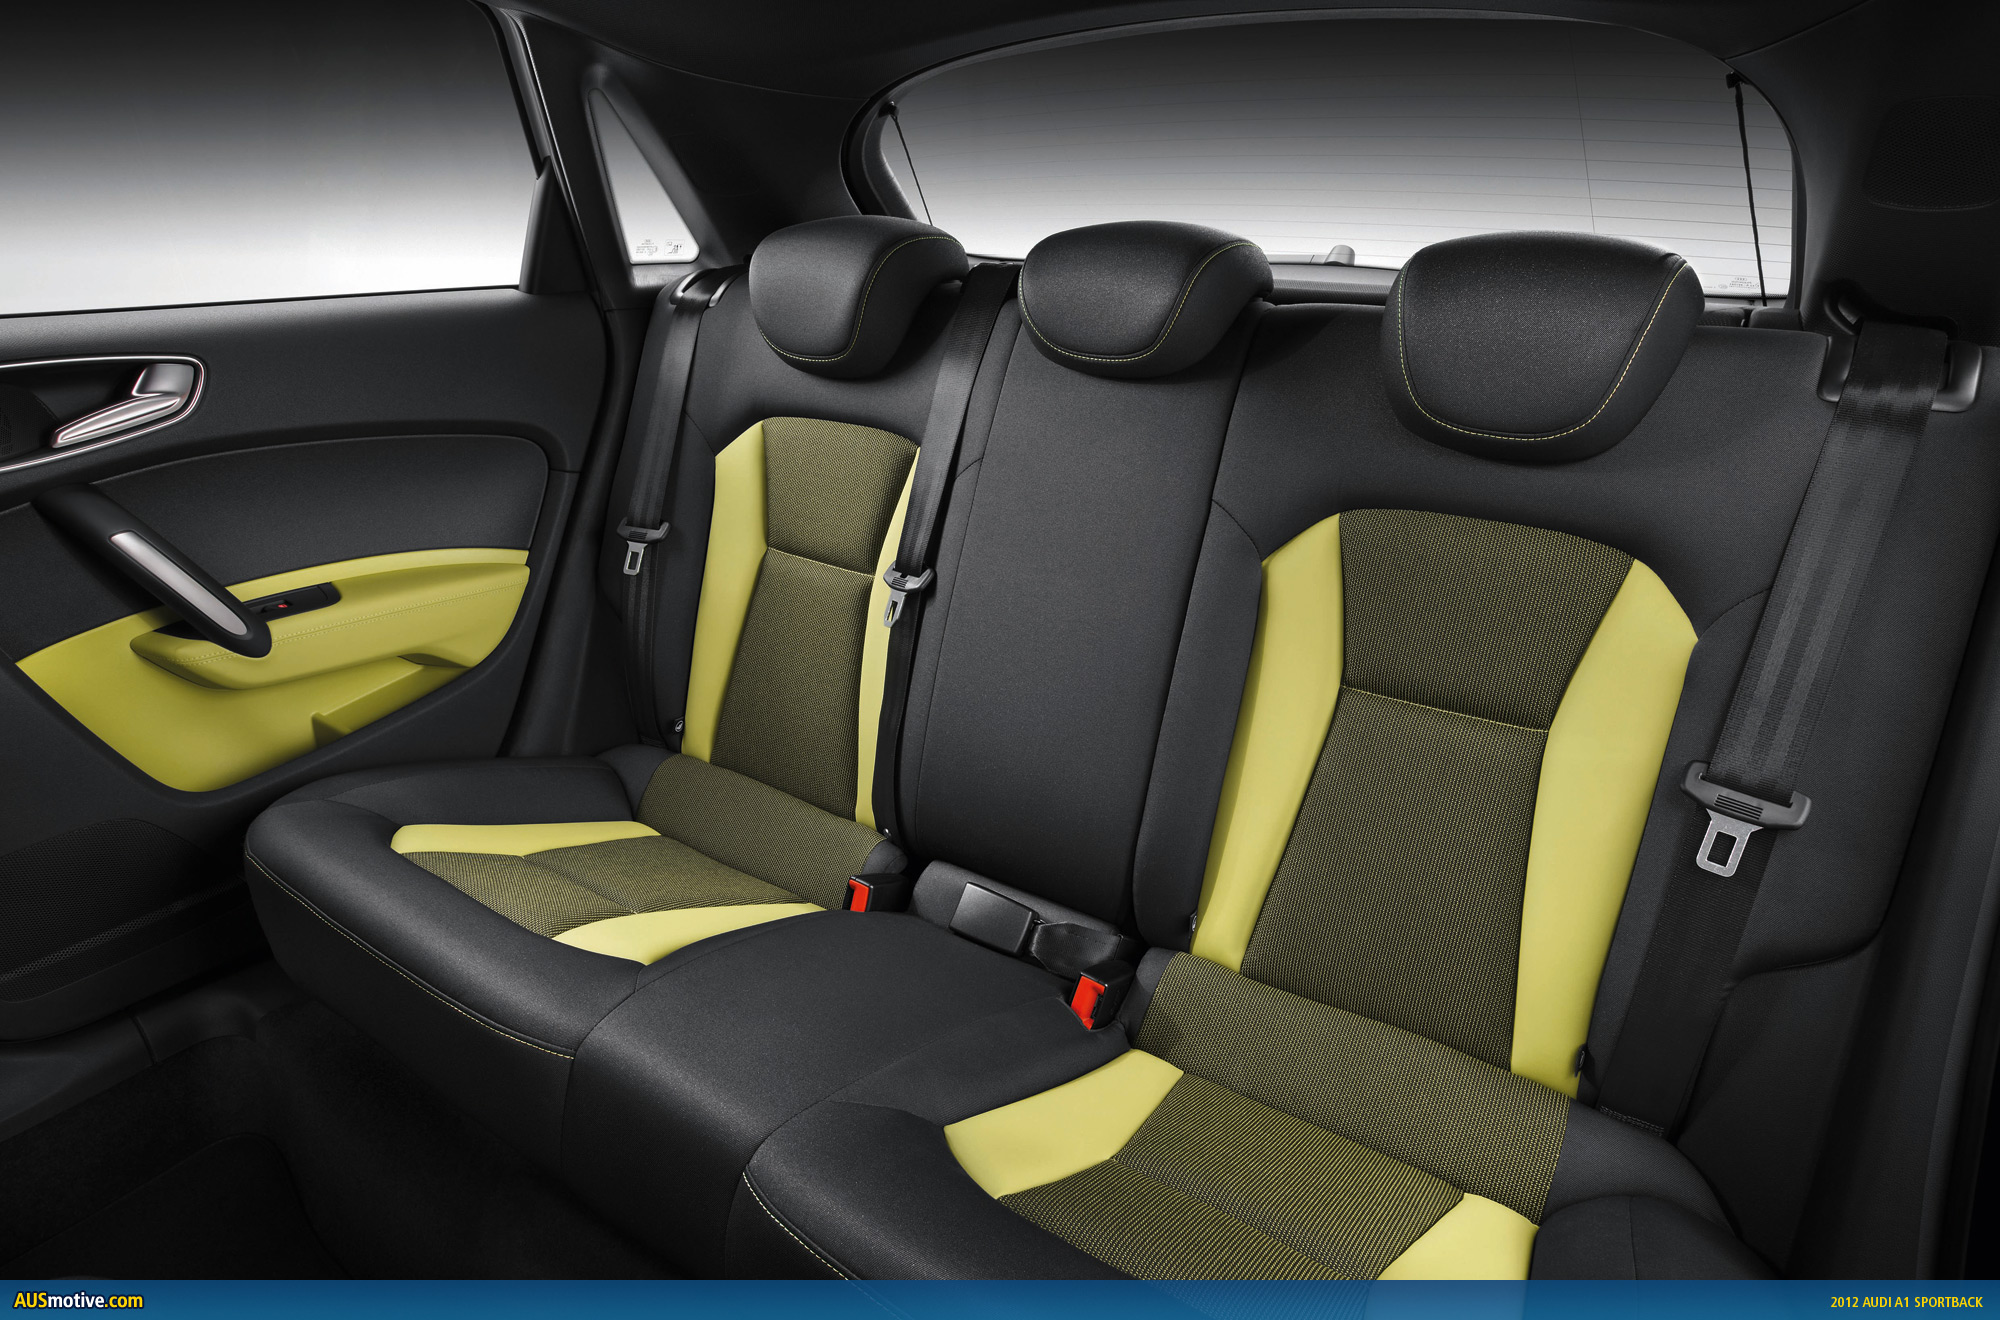 Indoor car cover fits Audi A1 Sportback 2012-2018 super soft now